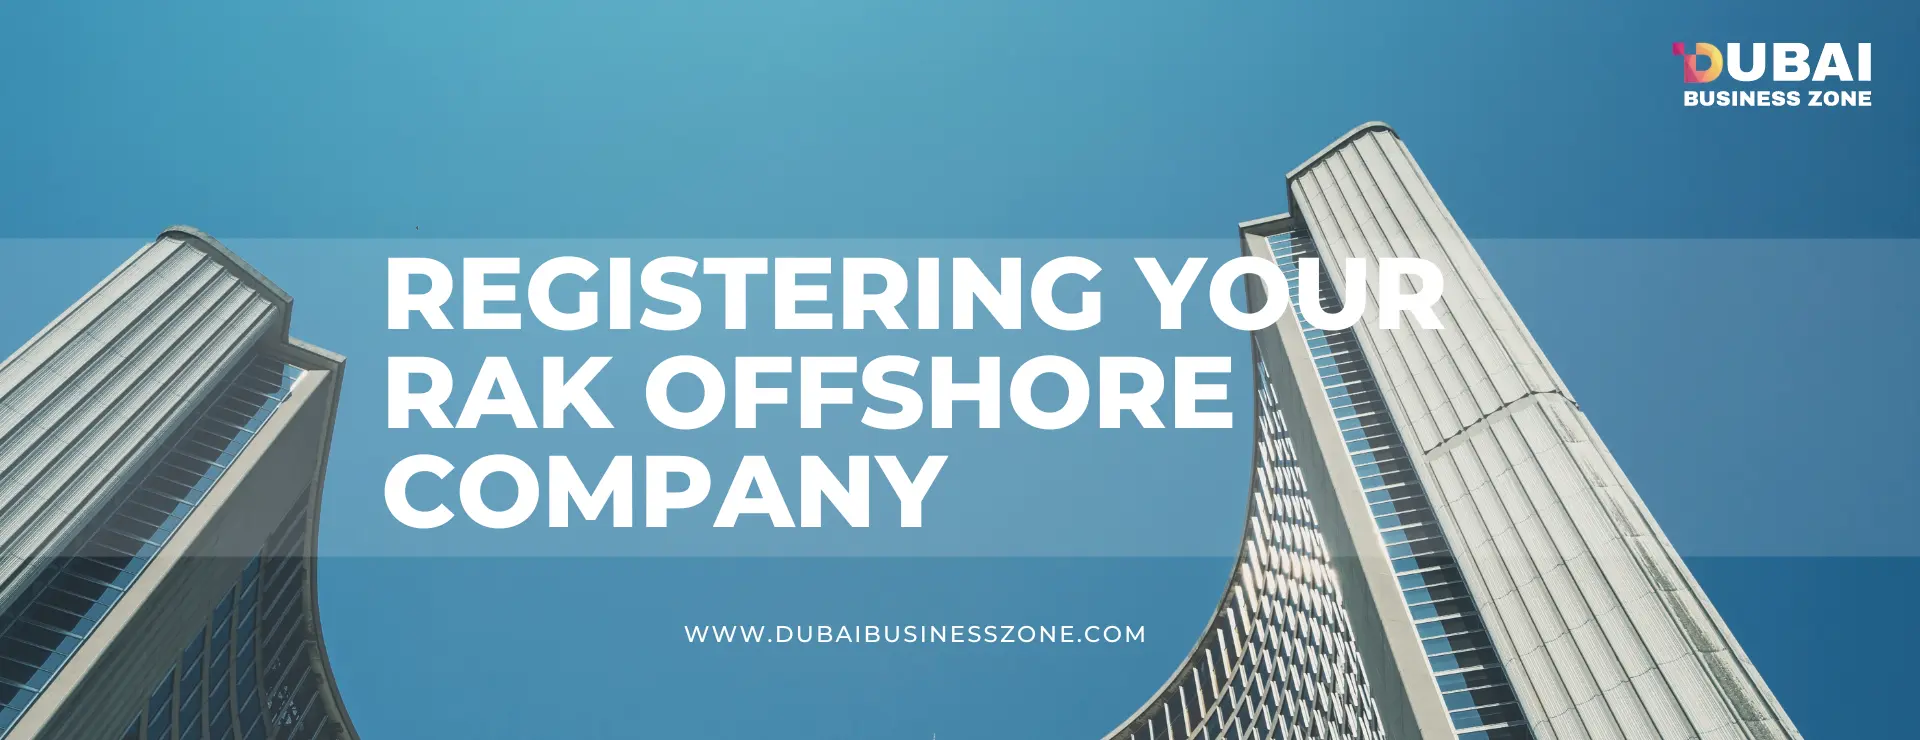 rak offshore company registration